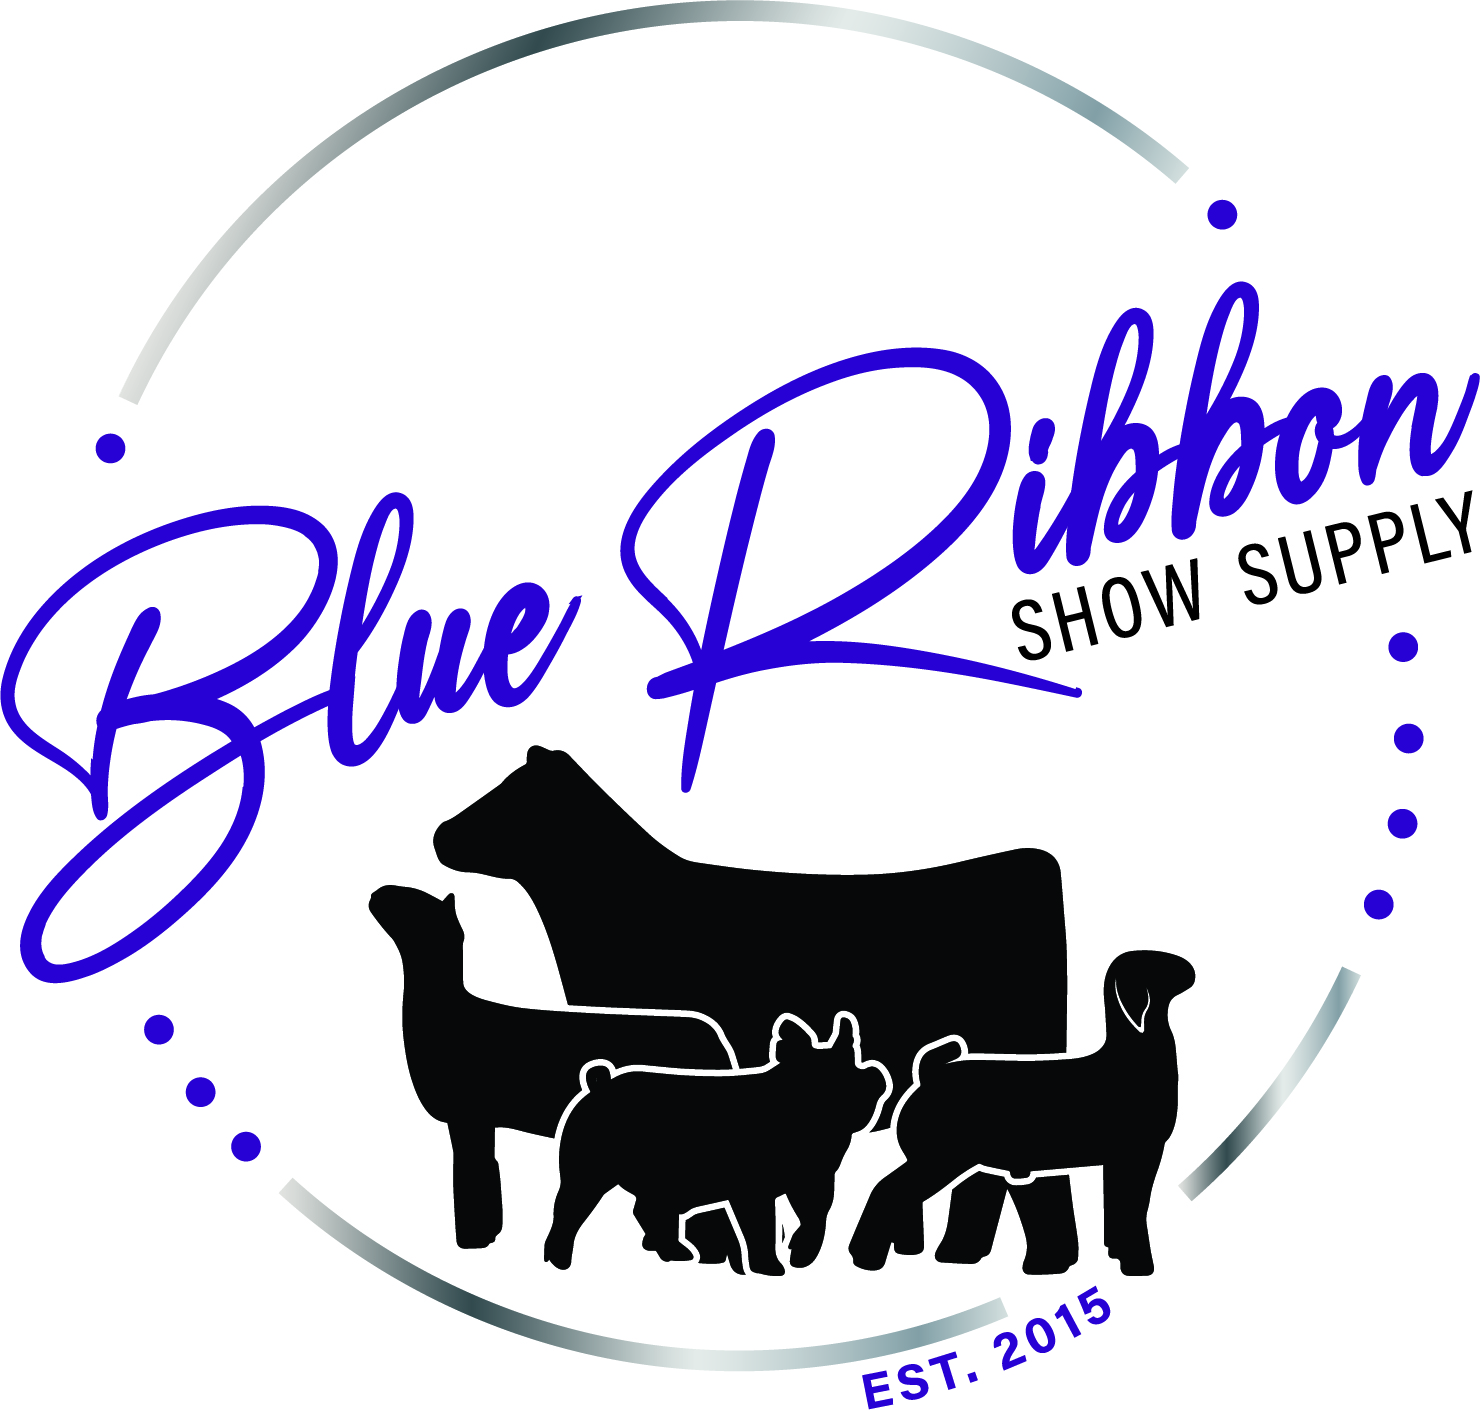 Blue Ribbon Show Supply